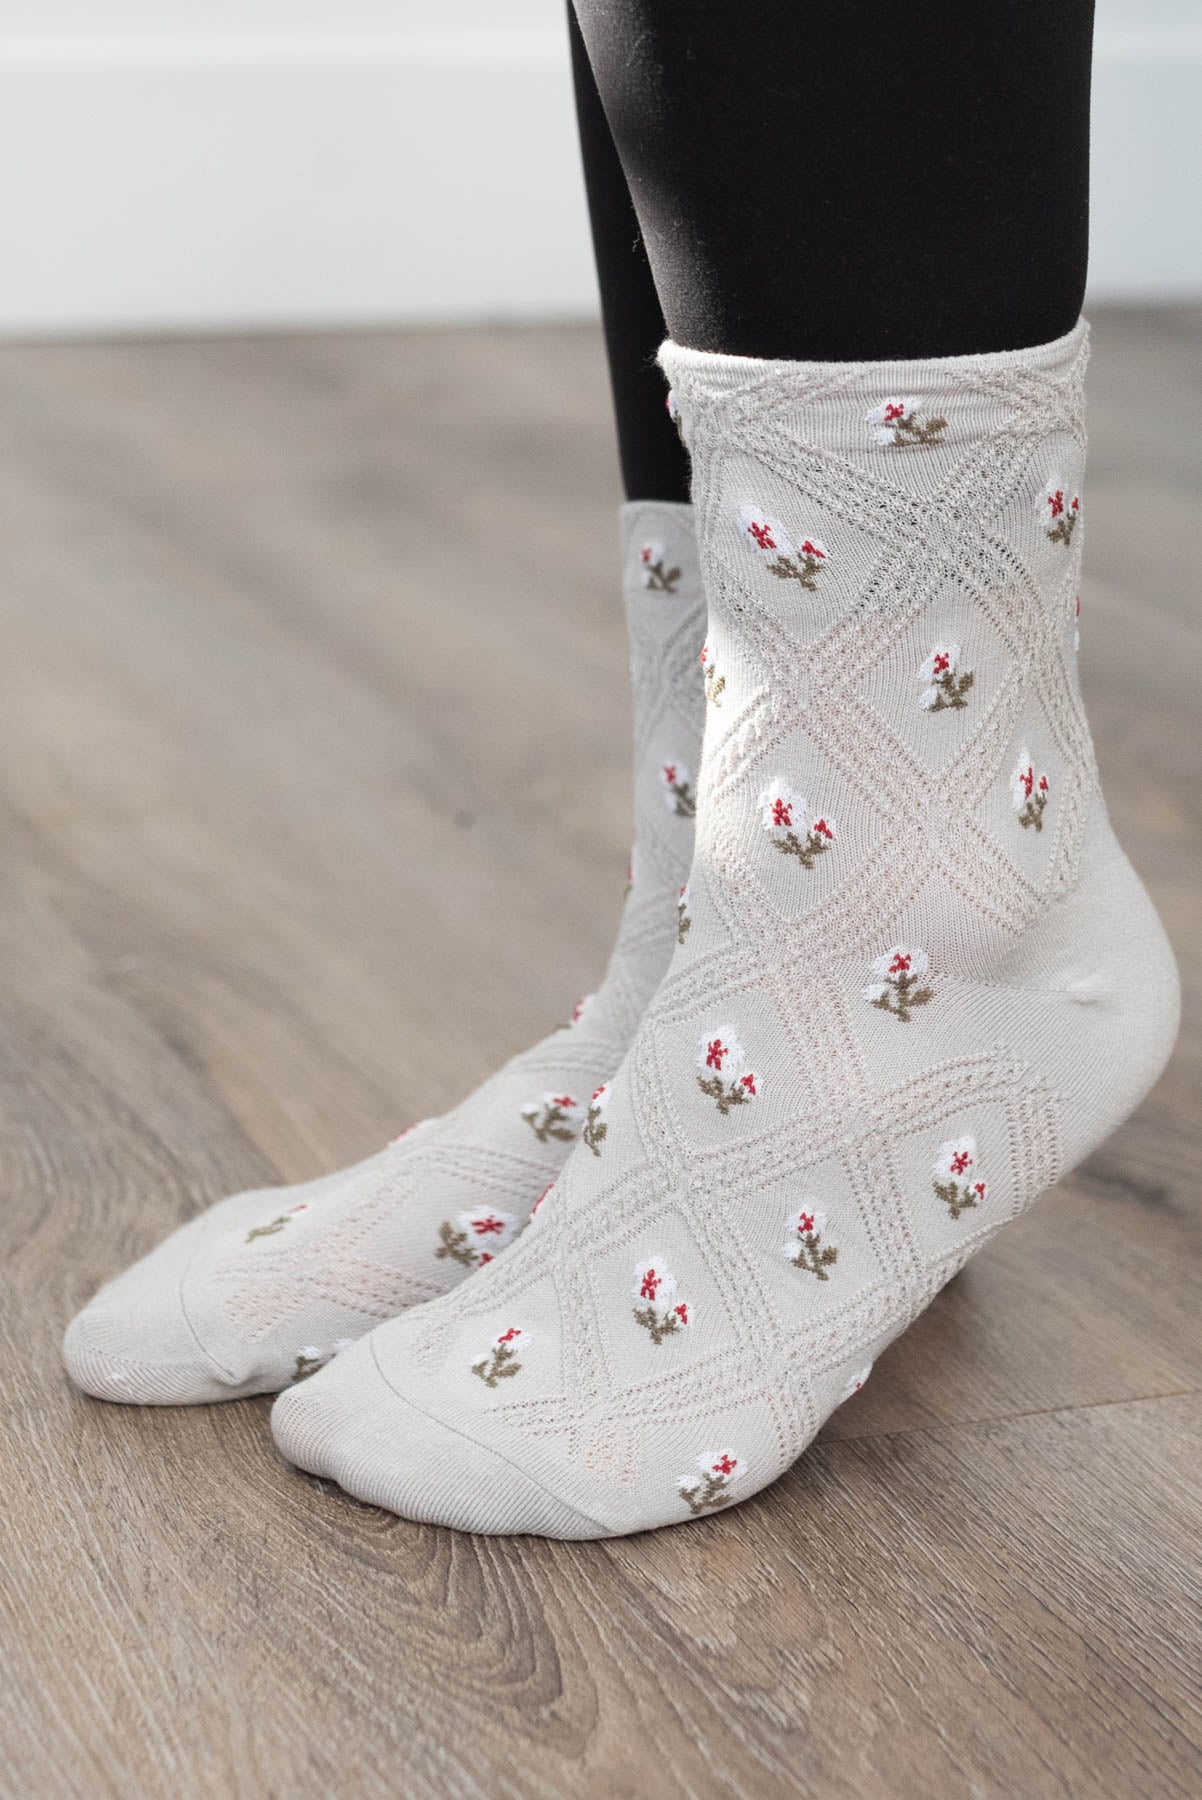 Side view of grey flower socks